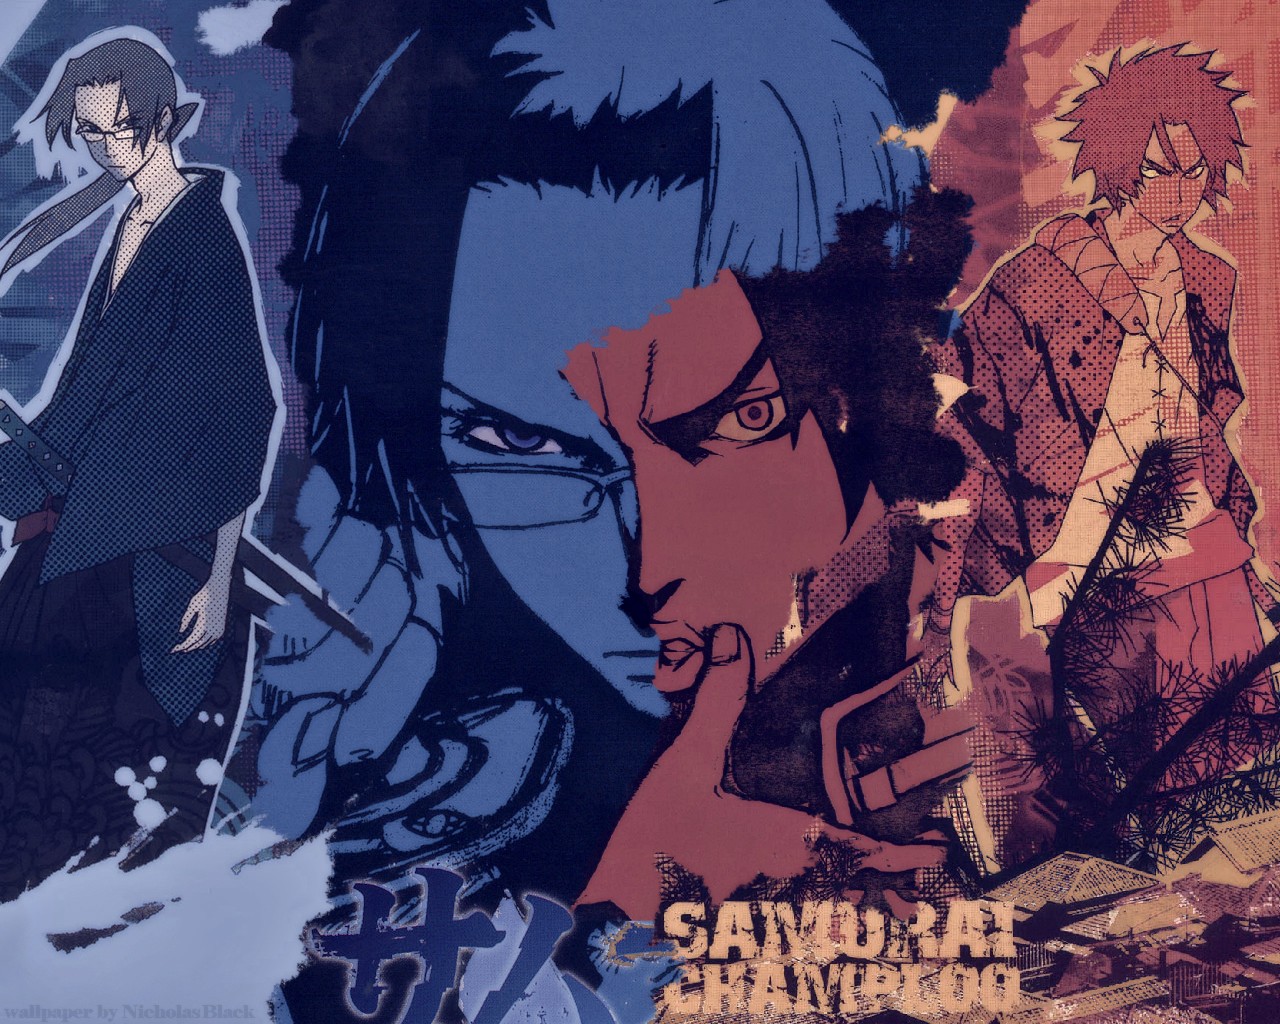 Samurai+champloo+wallpaper+jin